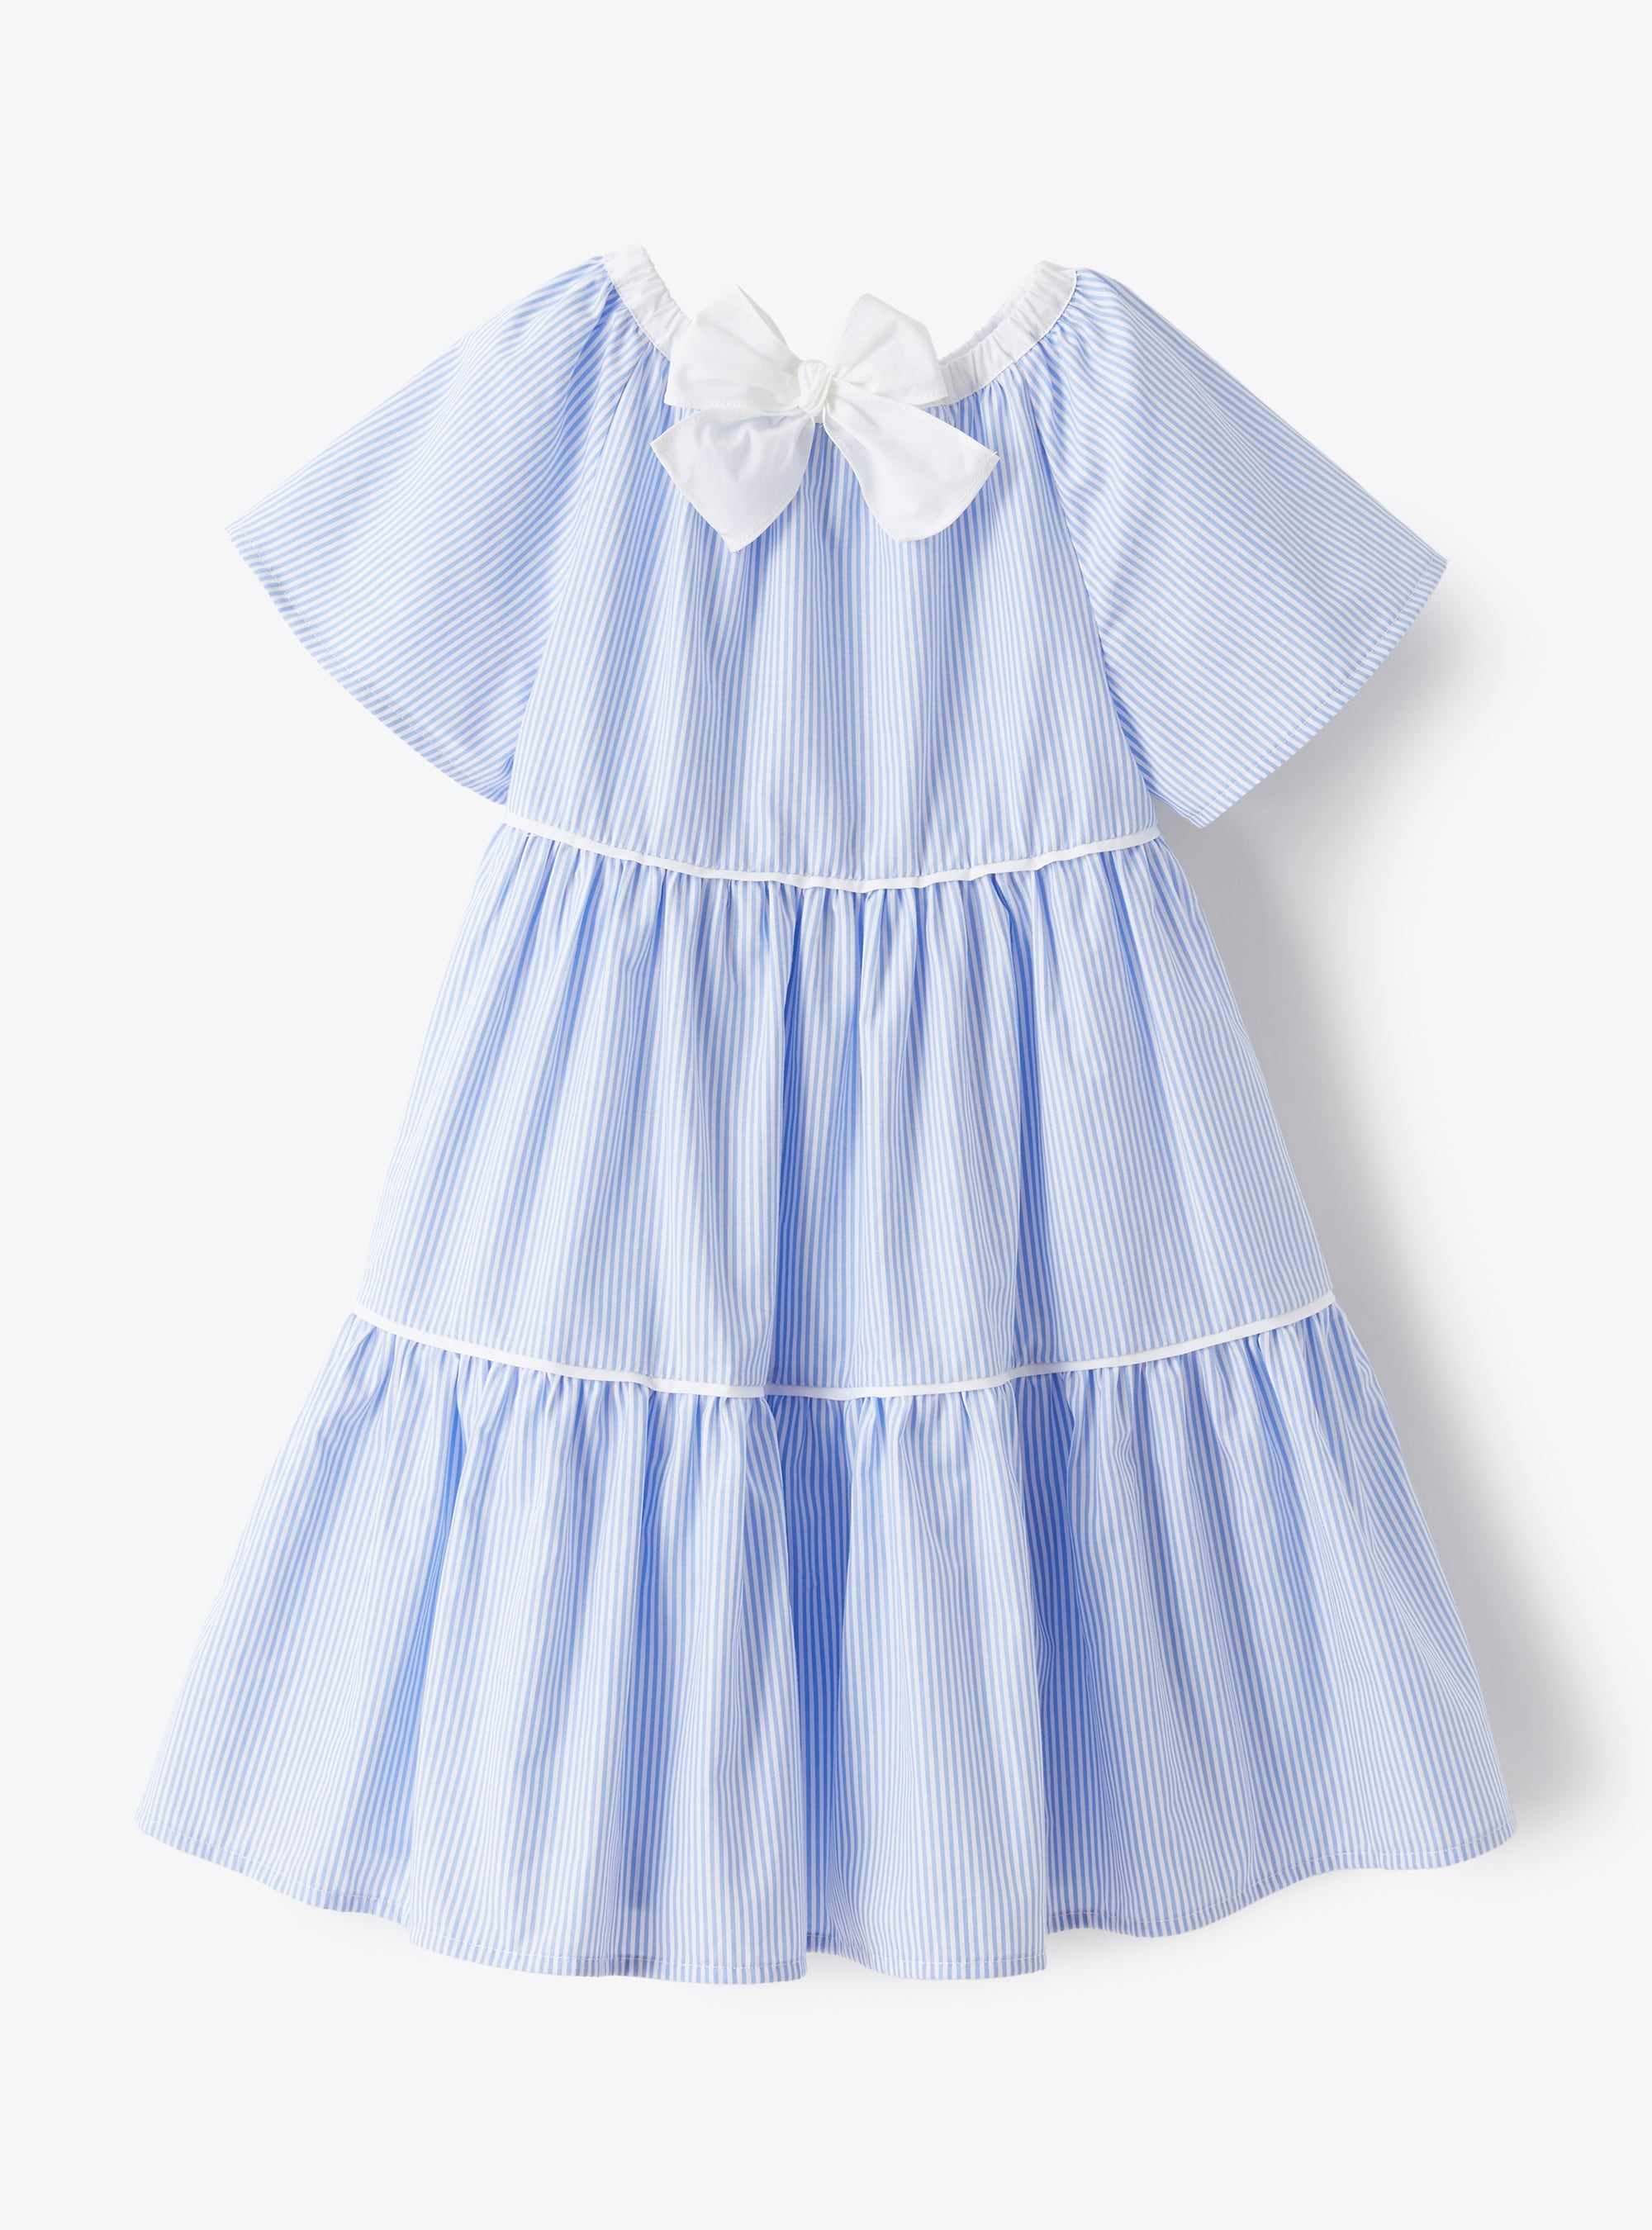 Tiered dress in a light-blue stripe - Light blue | Il Gufo